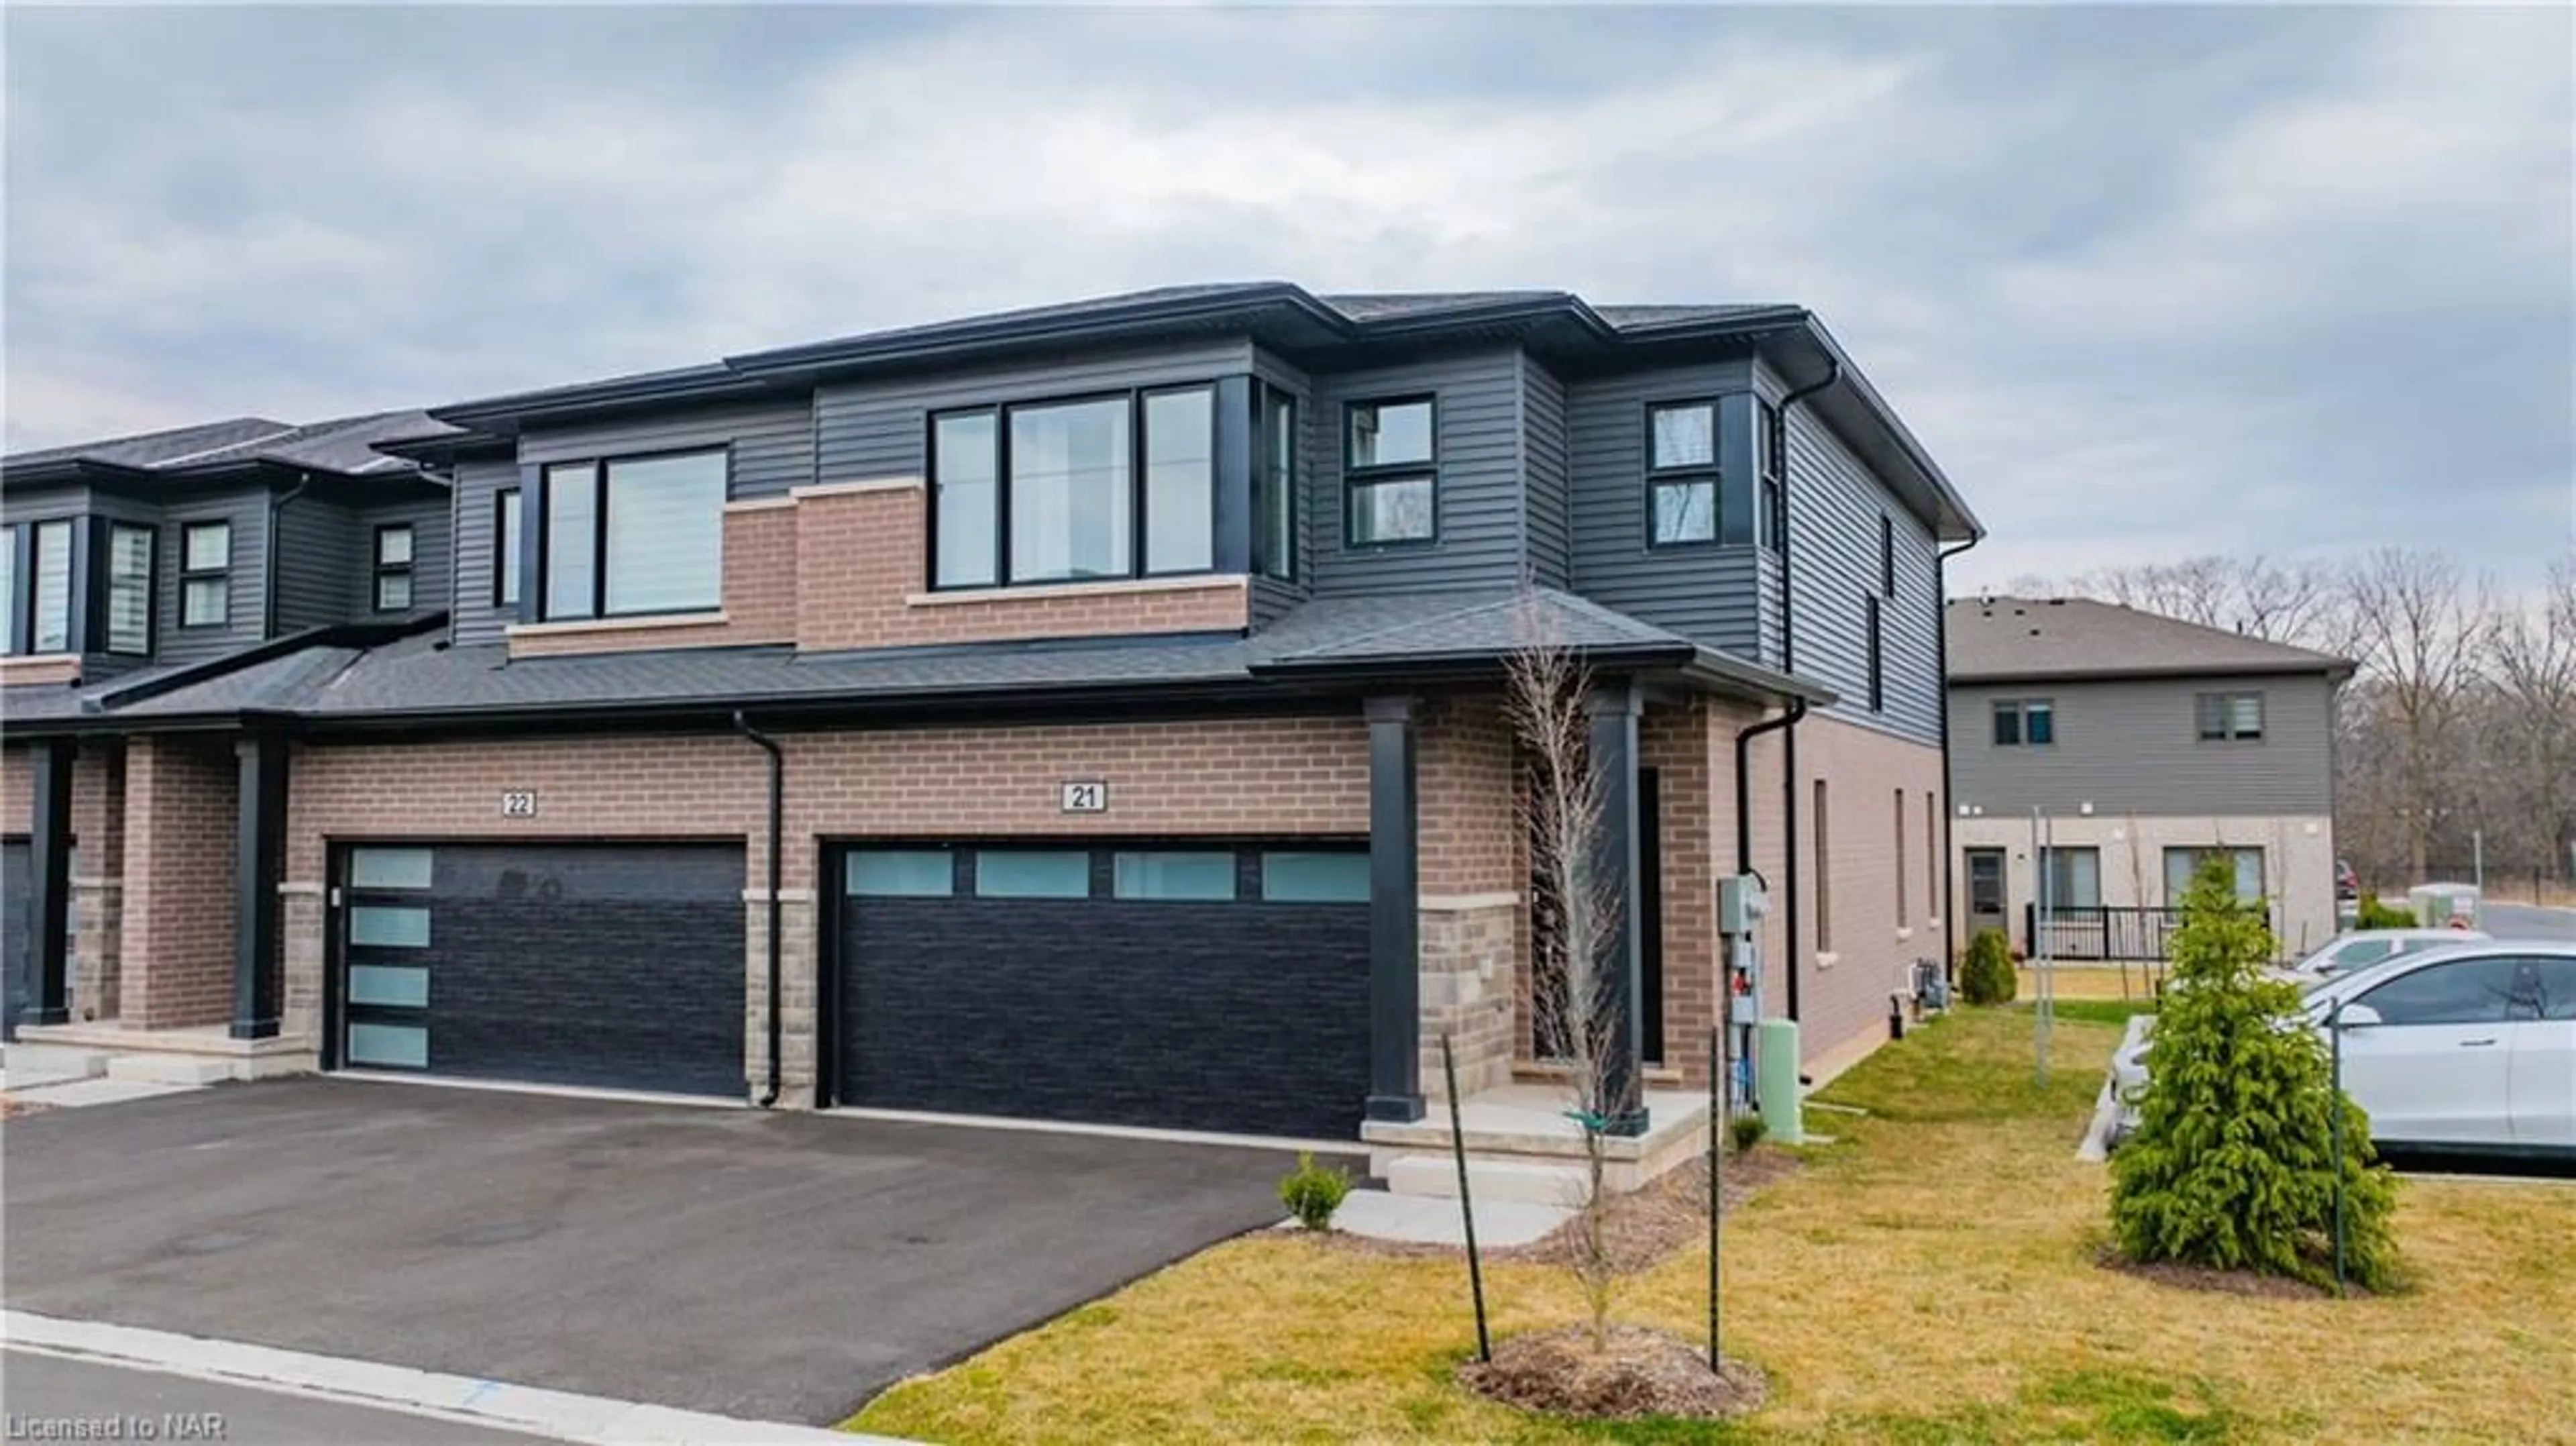 Home with brick exterior material for 4552 Portage Rd #21, Niagara Falls Ontario L2E 6A8